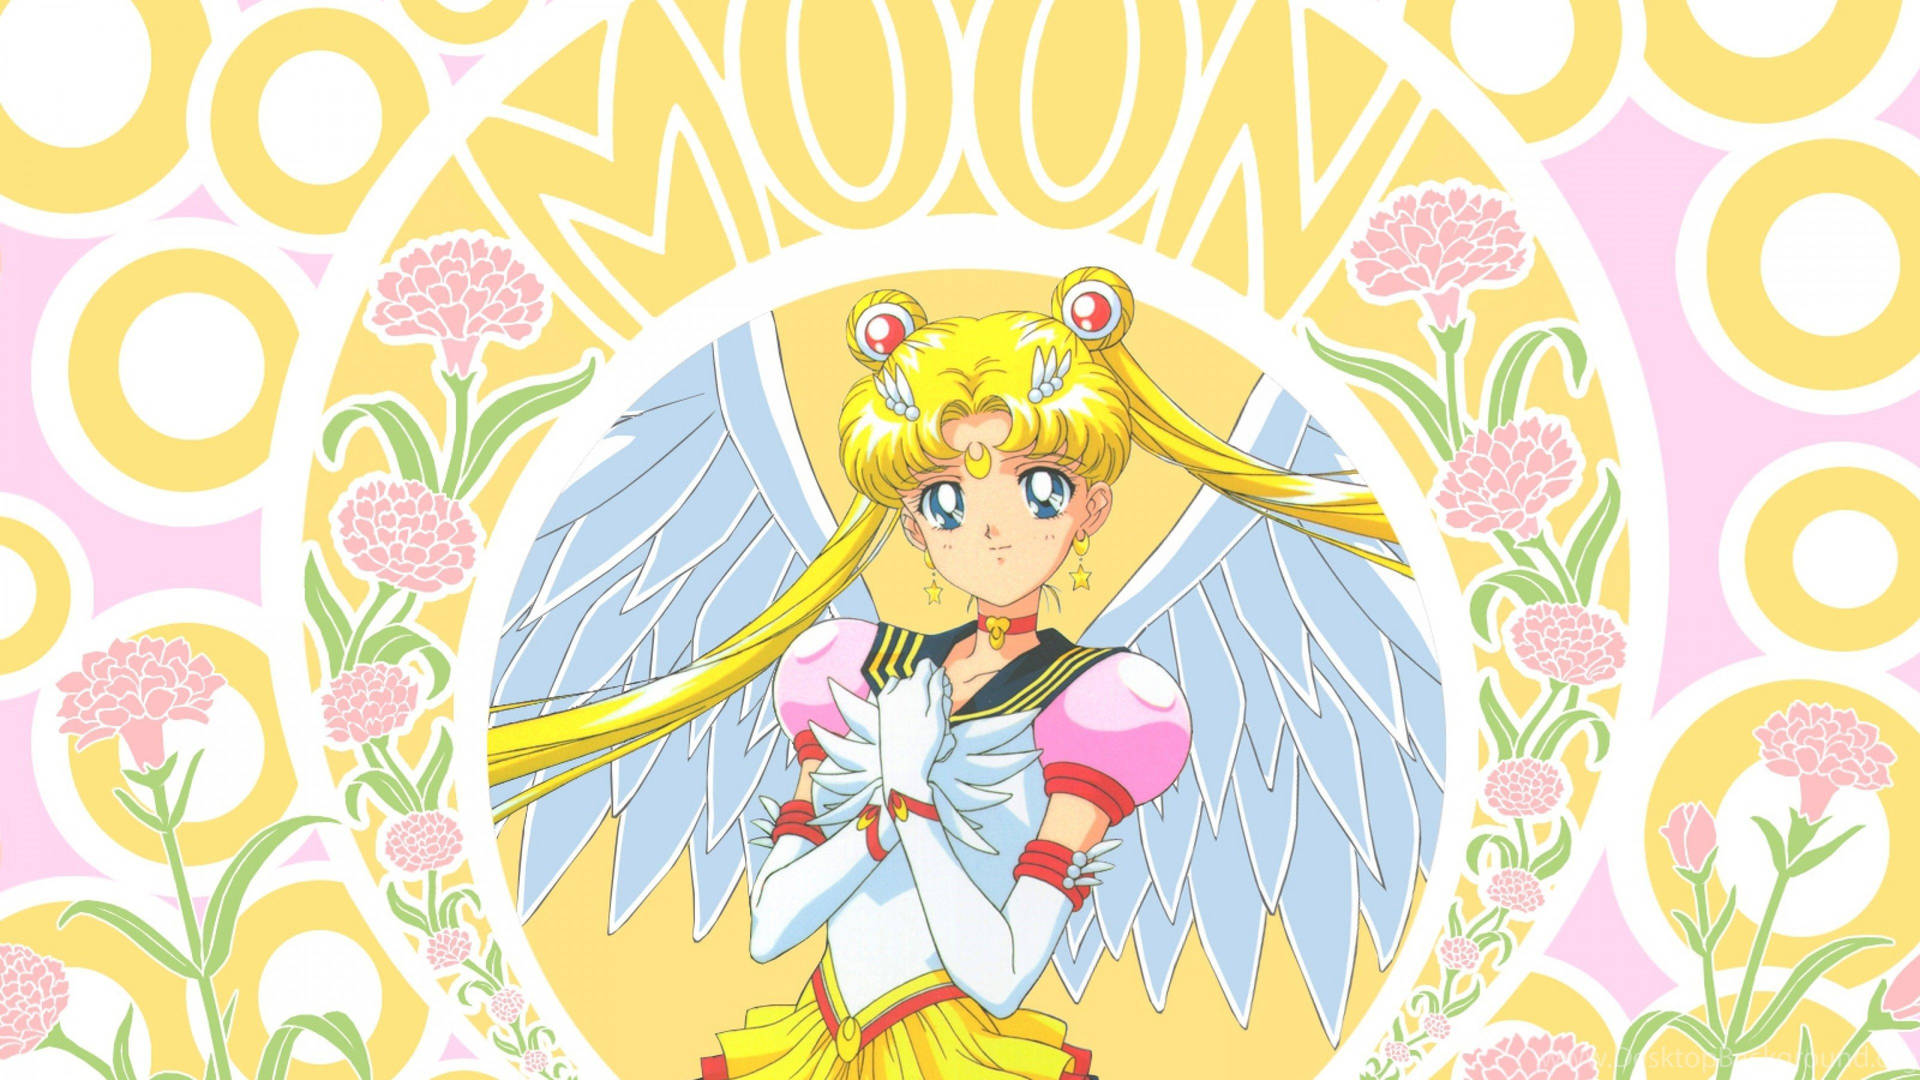 Sailor Moon Wallpapers